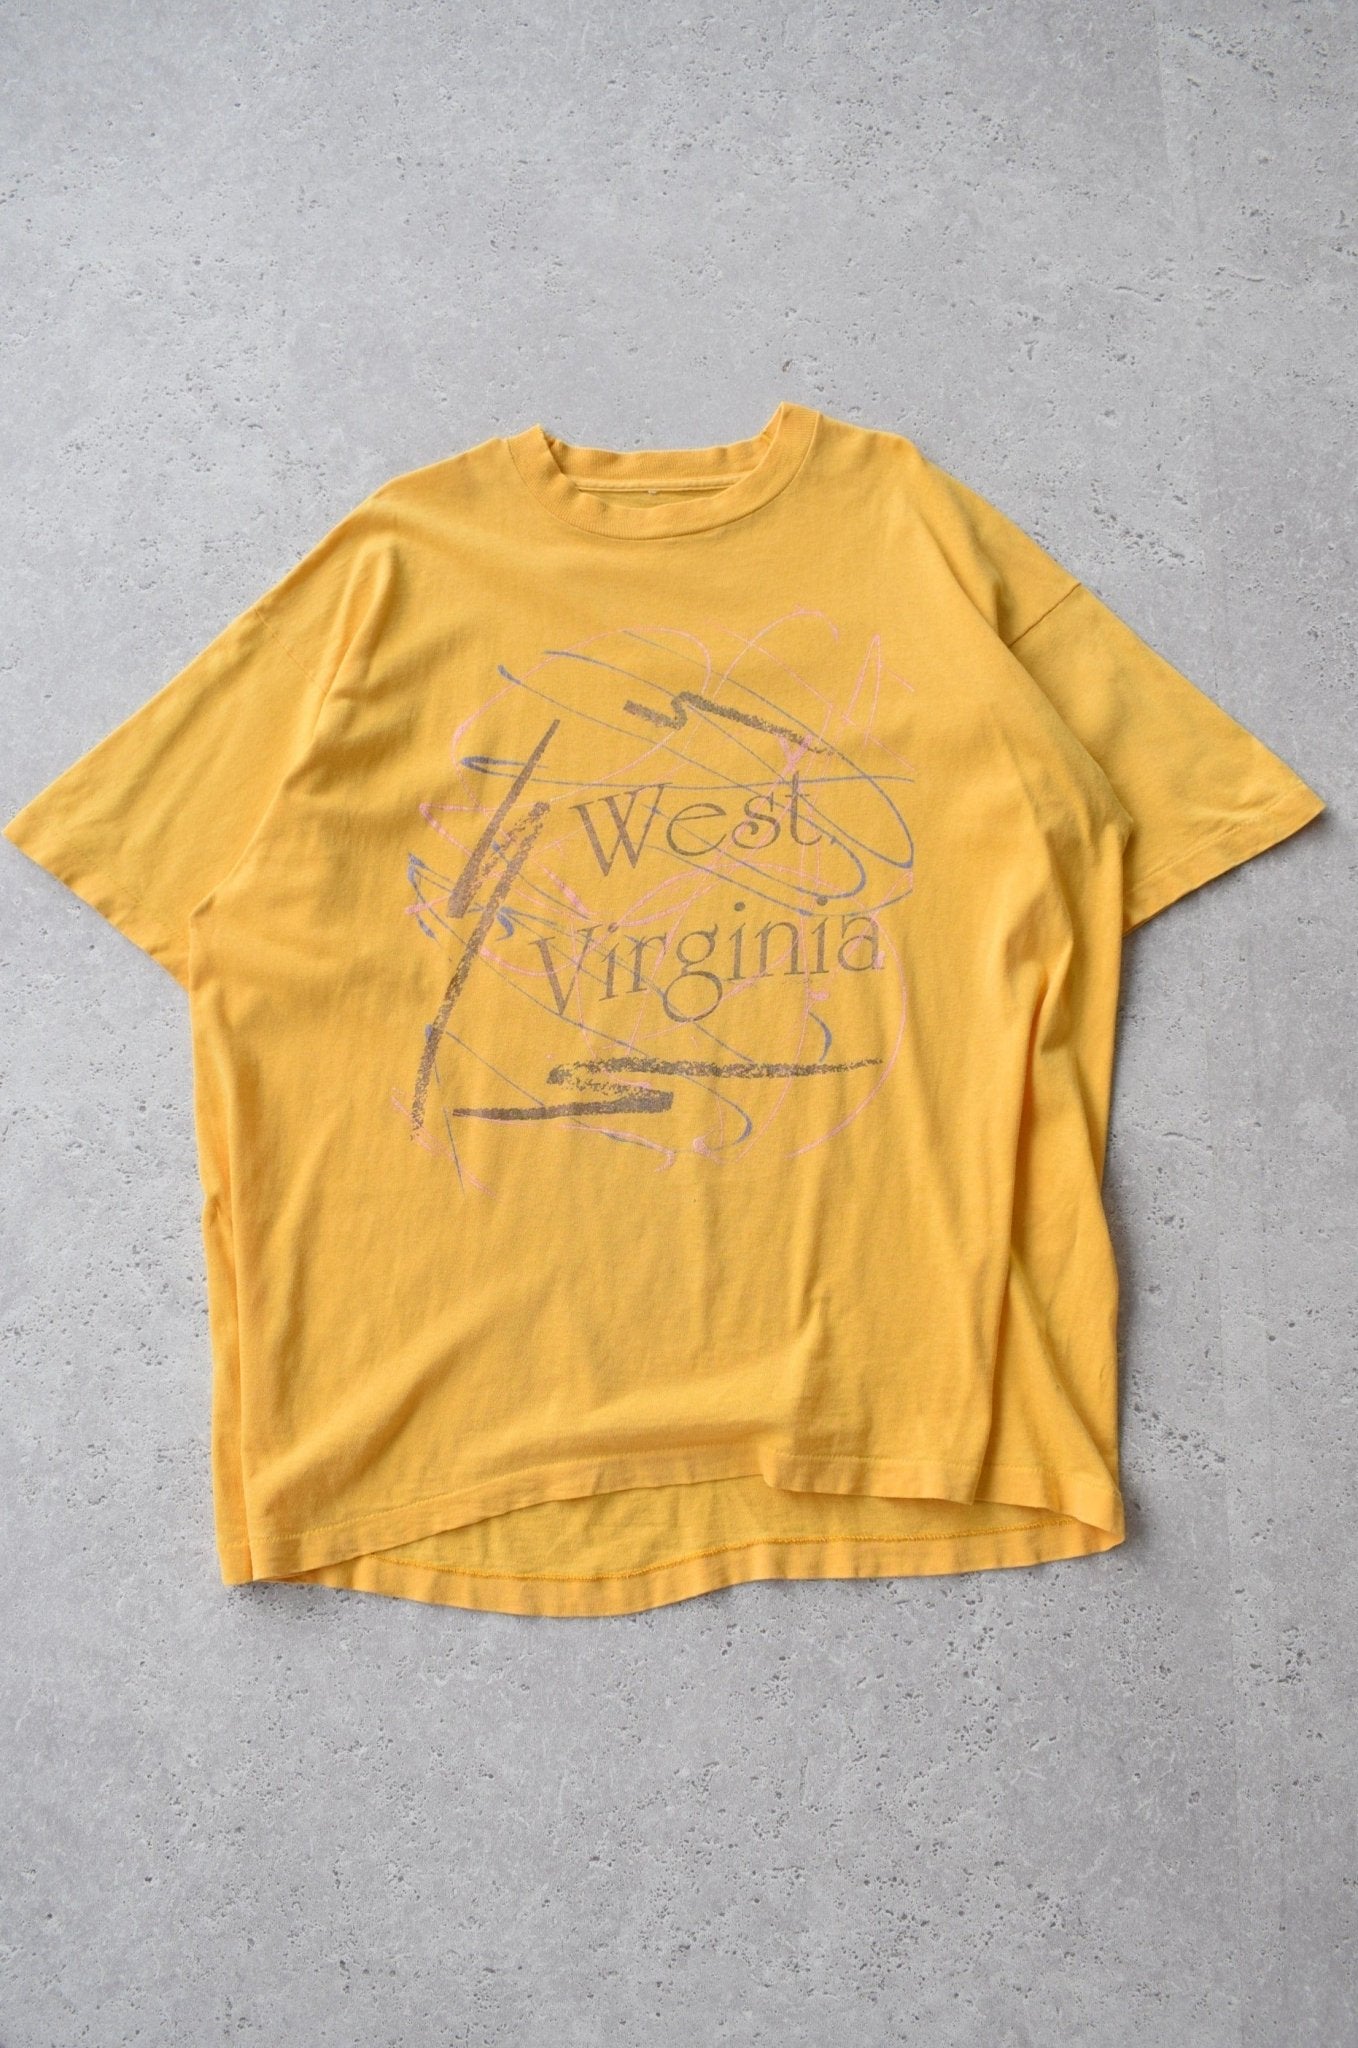 Vintage 80s West Virginia Tee (XXL) - Retrospective Store